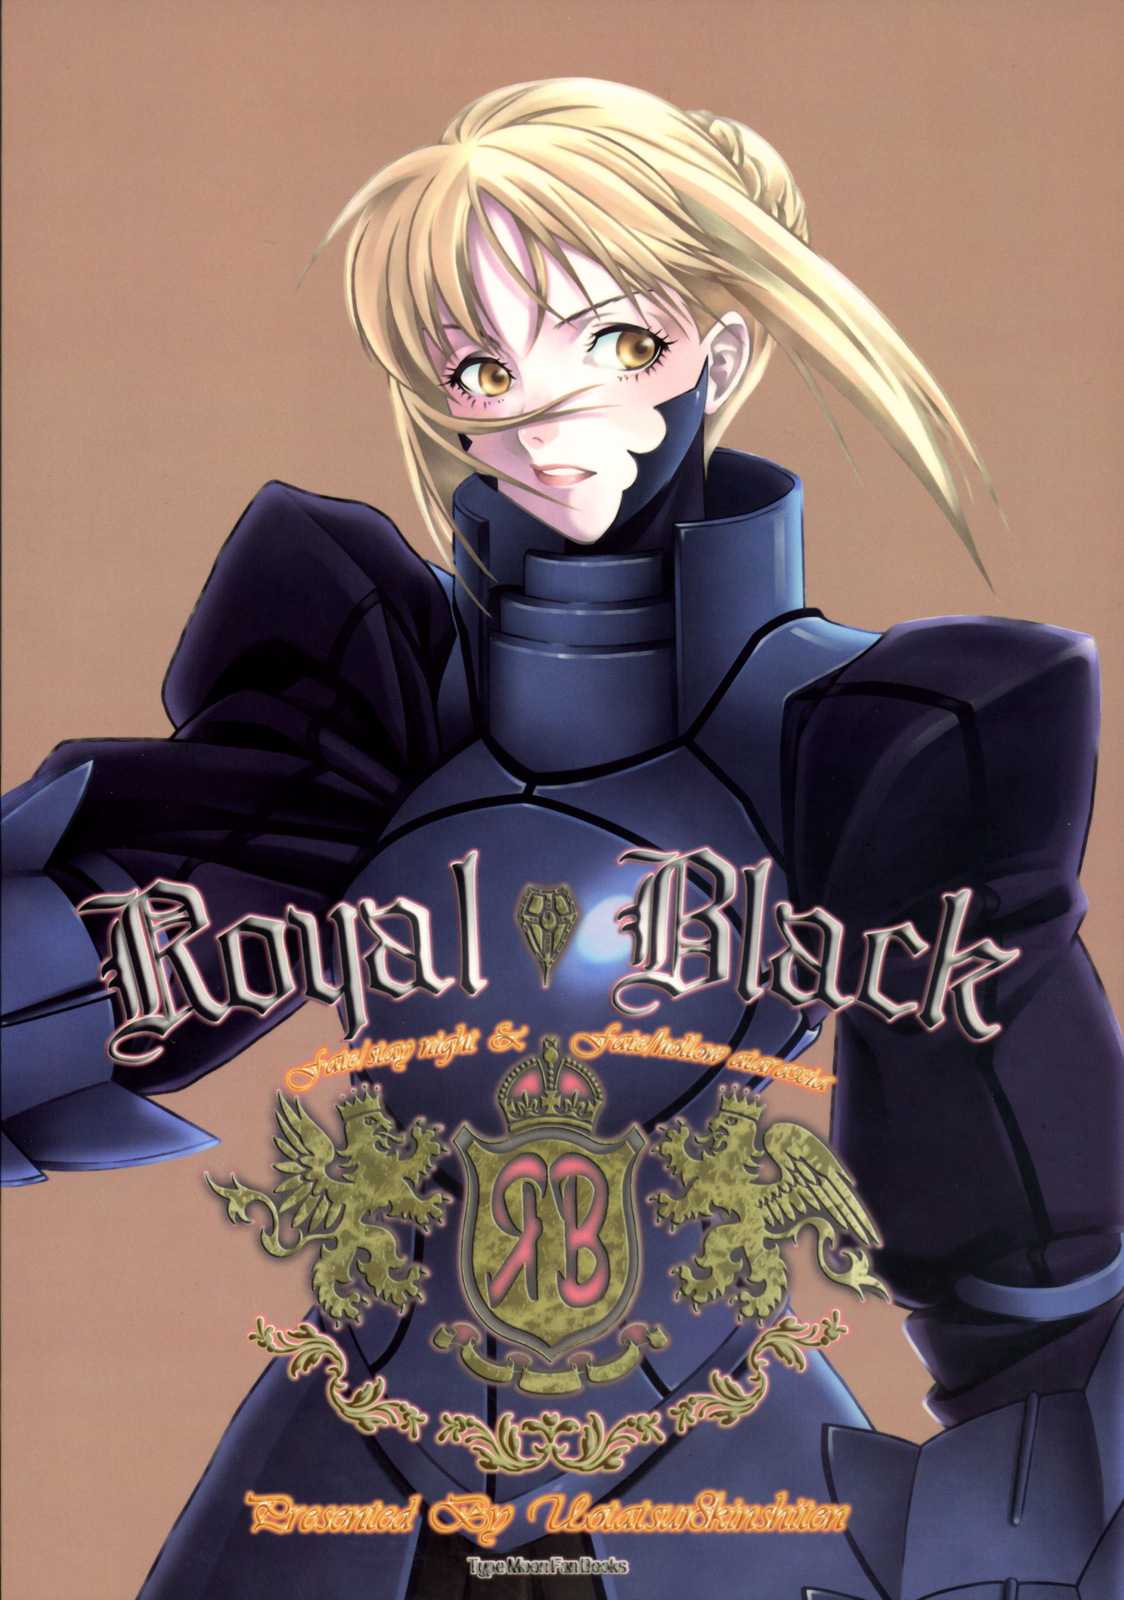 Royal_Black - FATE hollow_ataraxia 